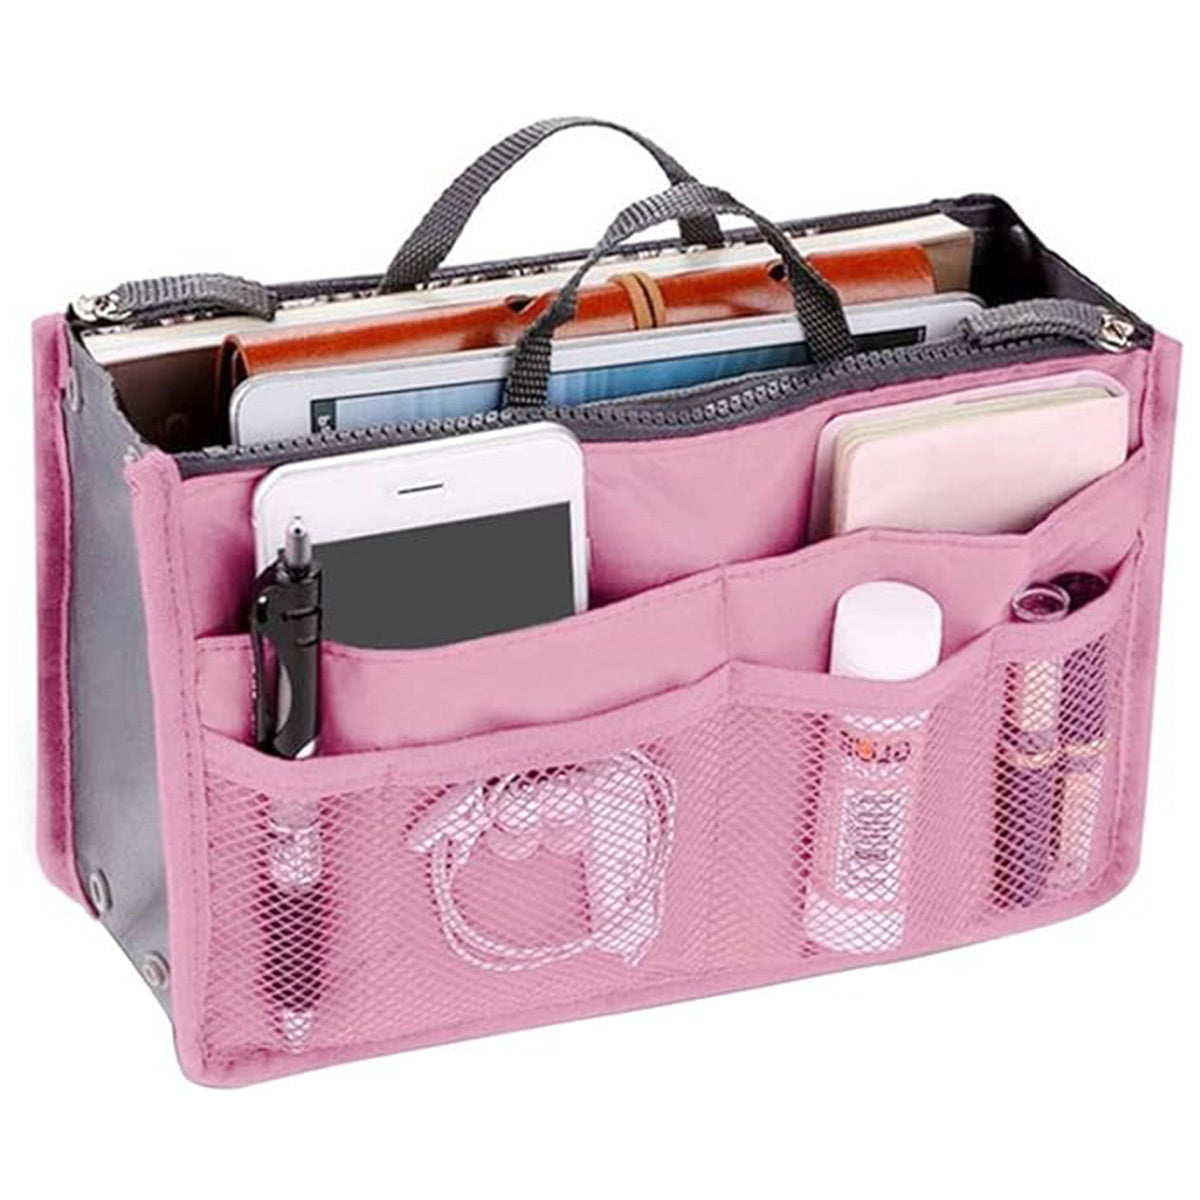 Handbag-organizer-insert-with-13-pockets-for-maximum-storage